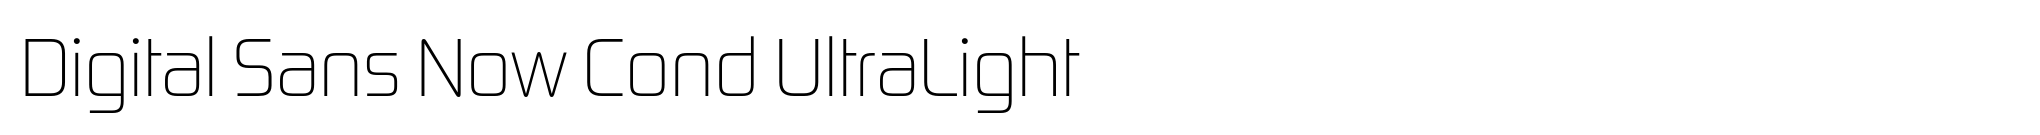 Digital Sans Now Cond UltraLight image